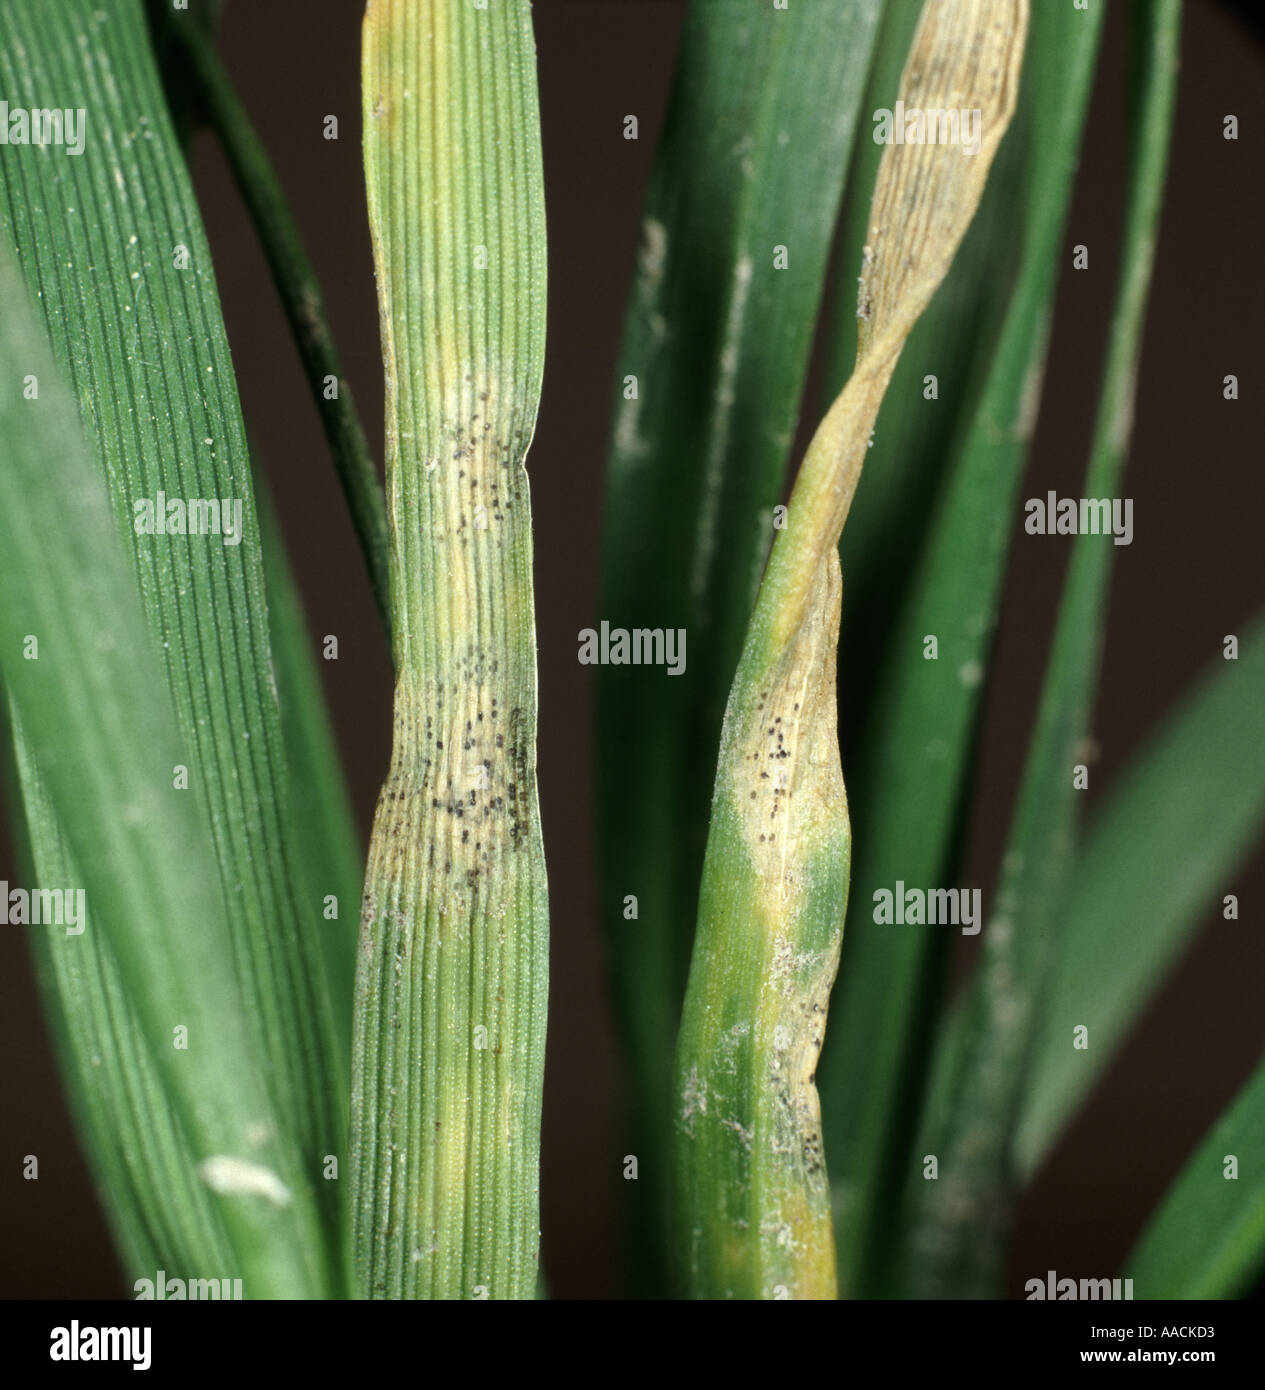 Septoria leaf blotch Zymeptoria tritici on wheat fungal lesion Stock Photo